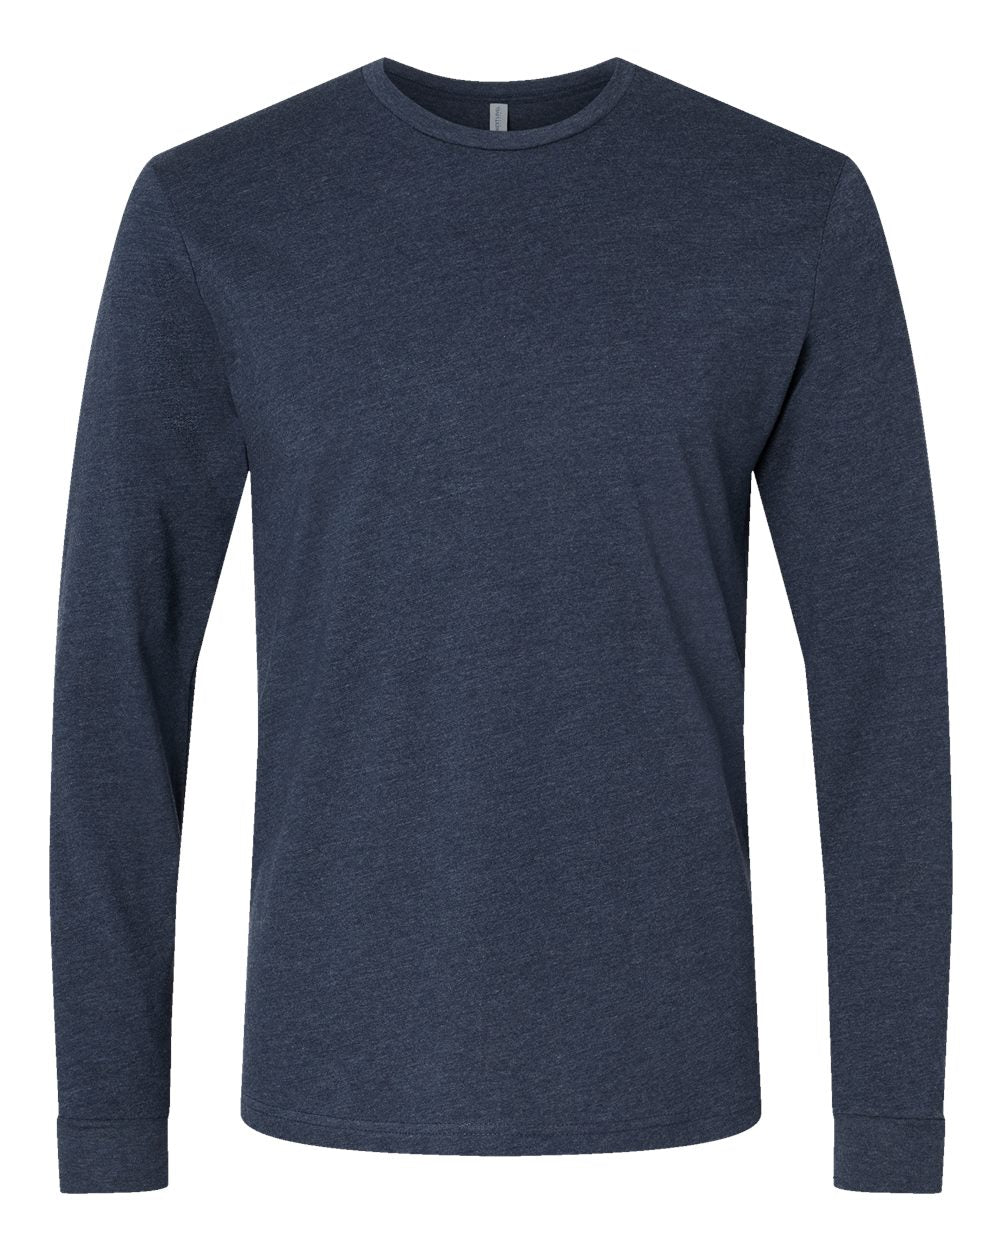 Next Level - CVC Long Sleeve T-Shirt - 6211